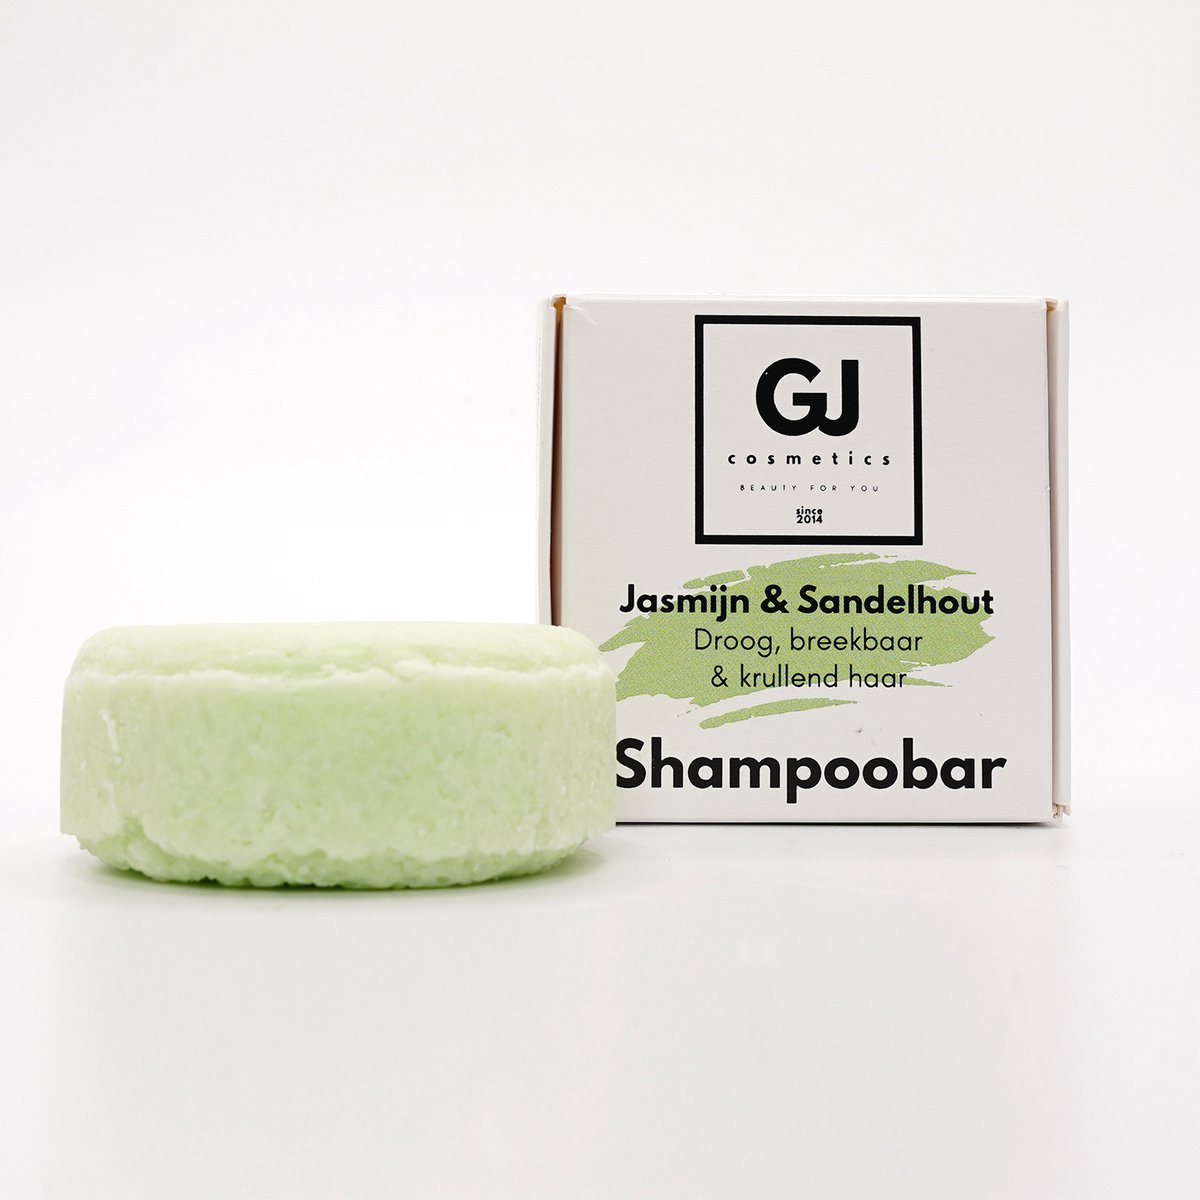 GJ Cosmetics Shampoobar Jasmijn & Sandelhout